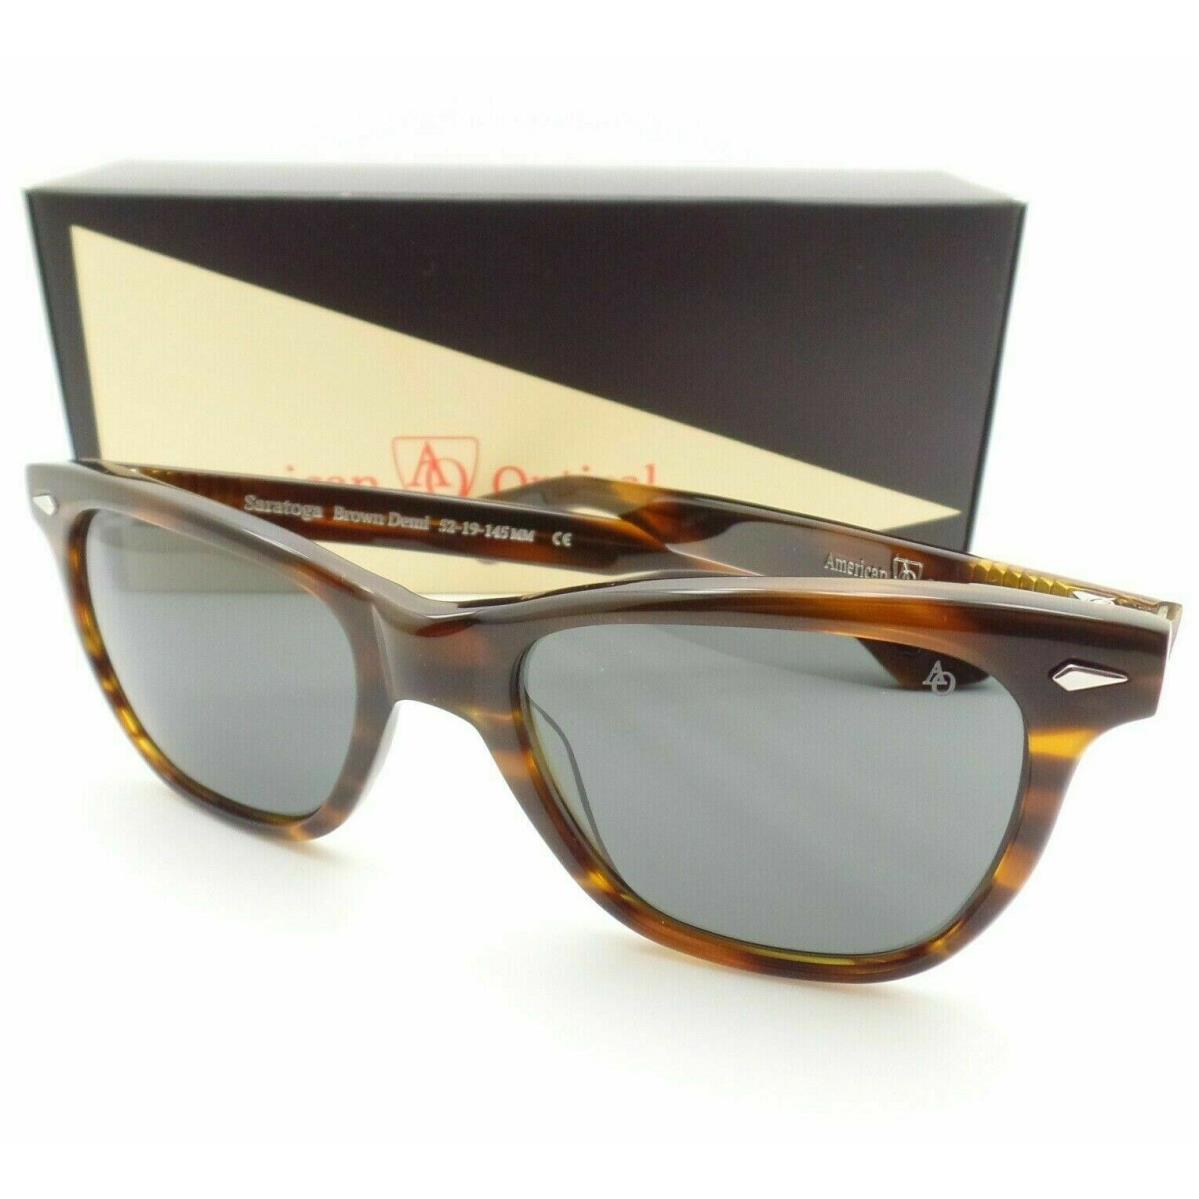 AO American Optical Saratoga Brown Demi 6 Grey Sunglasses Polar or Frame Only